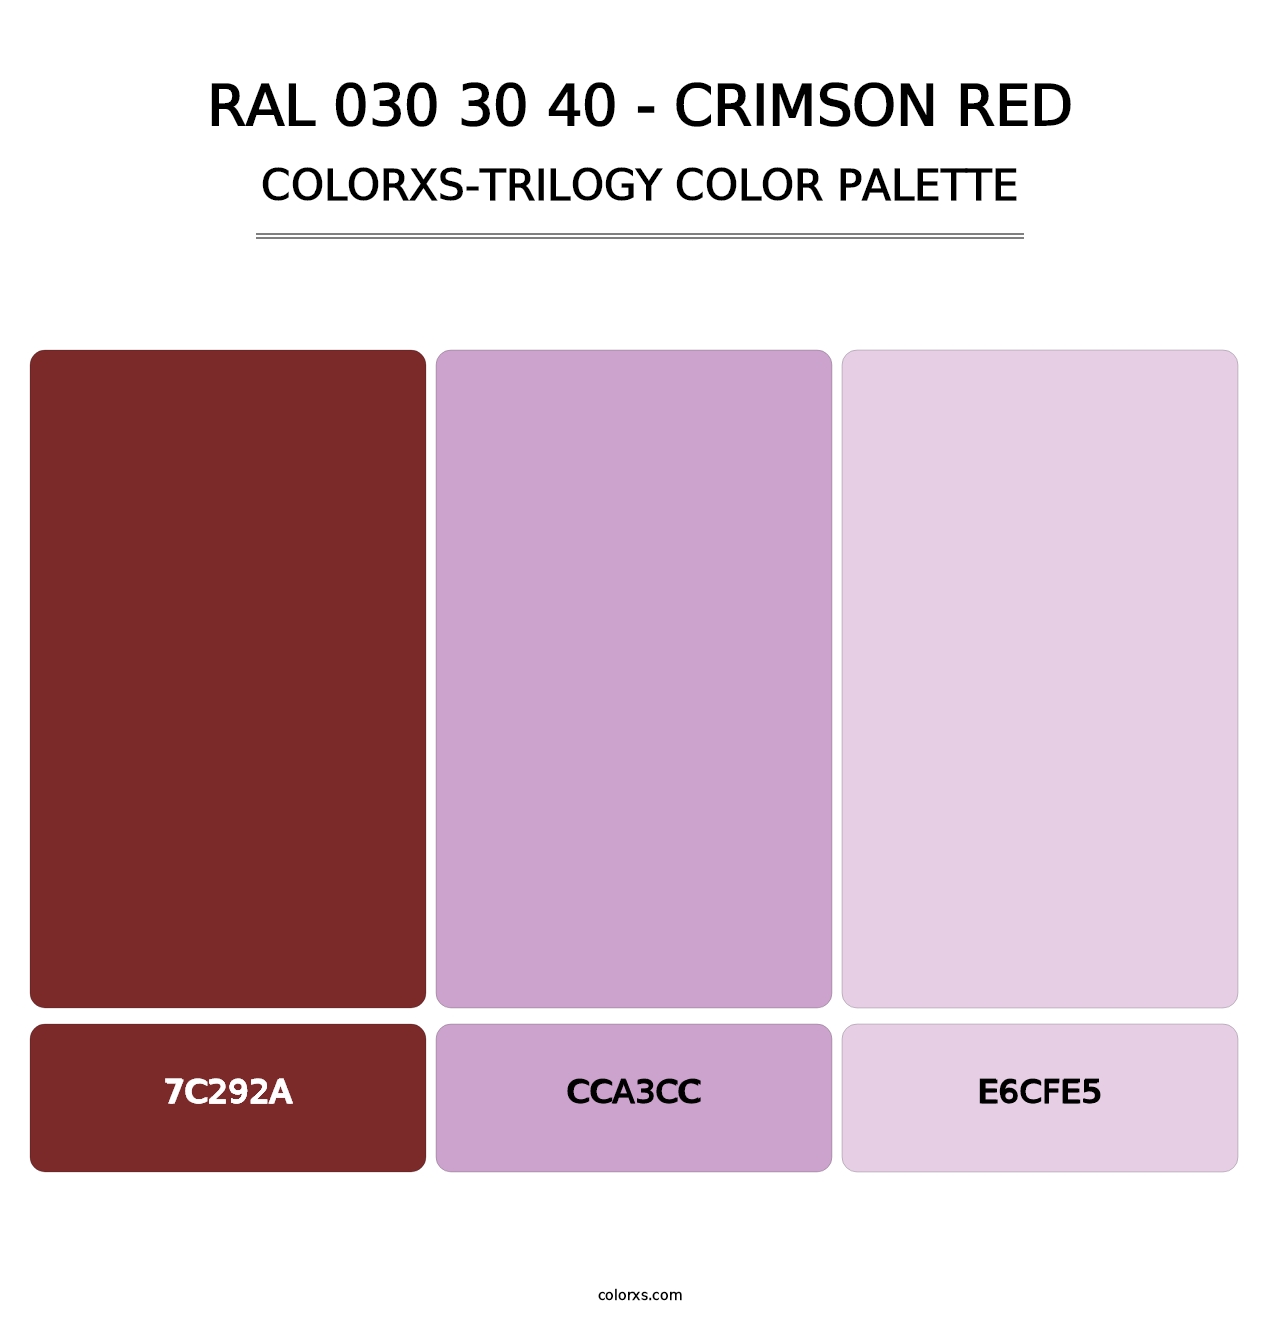 RAL 030 30 40 - Crimson Red - Colorxs Trilogy Palette